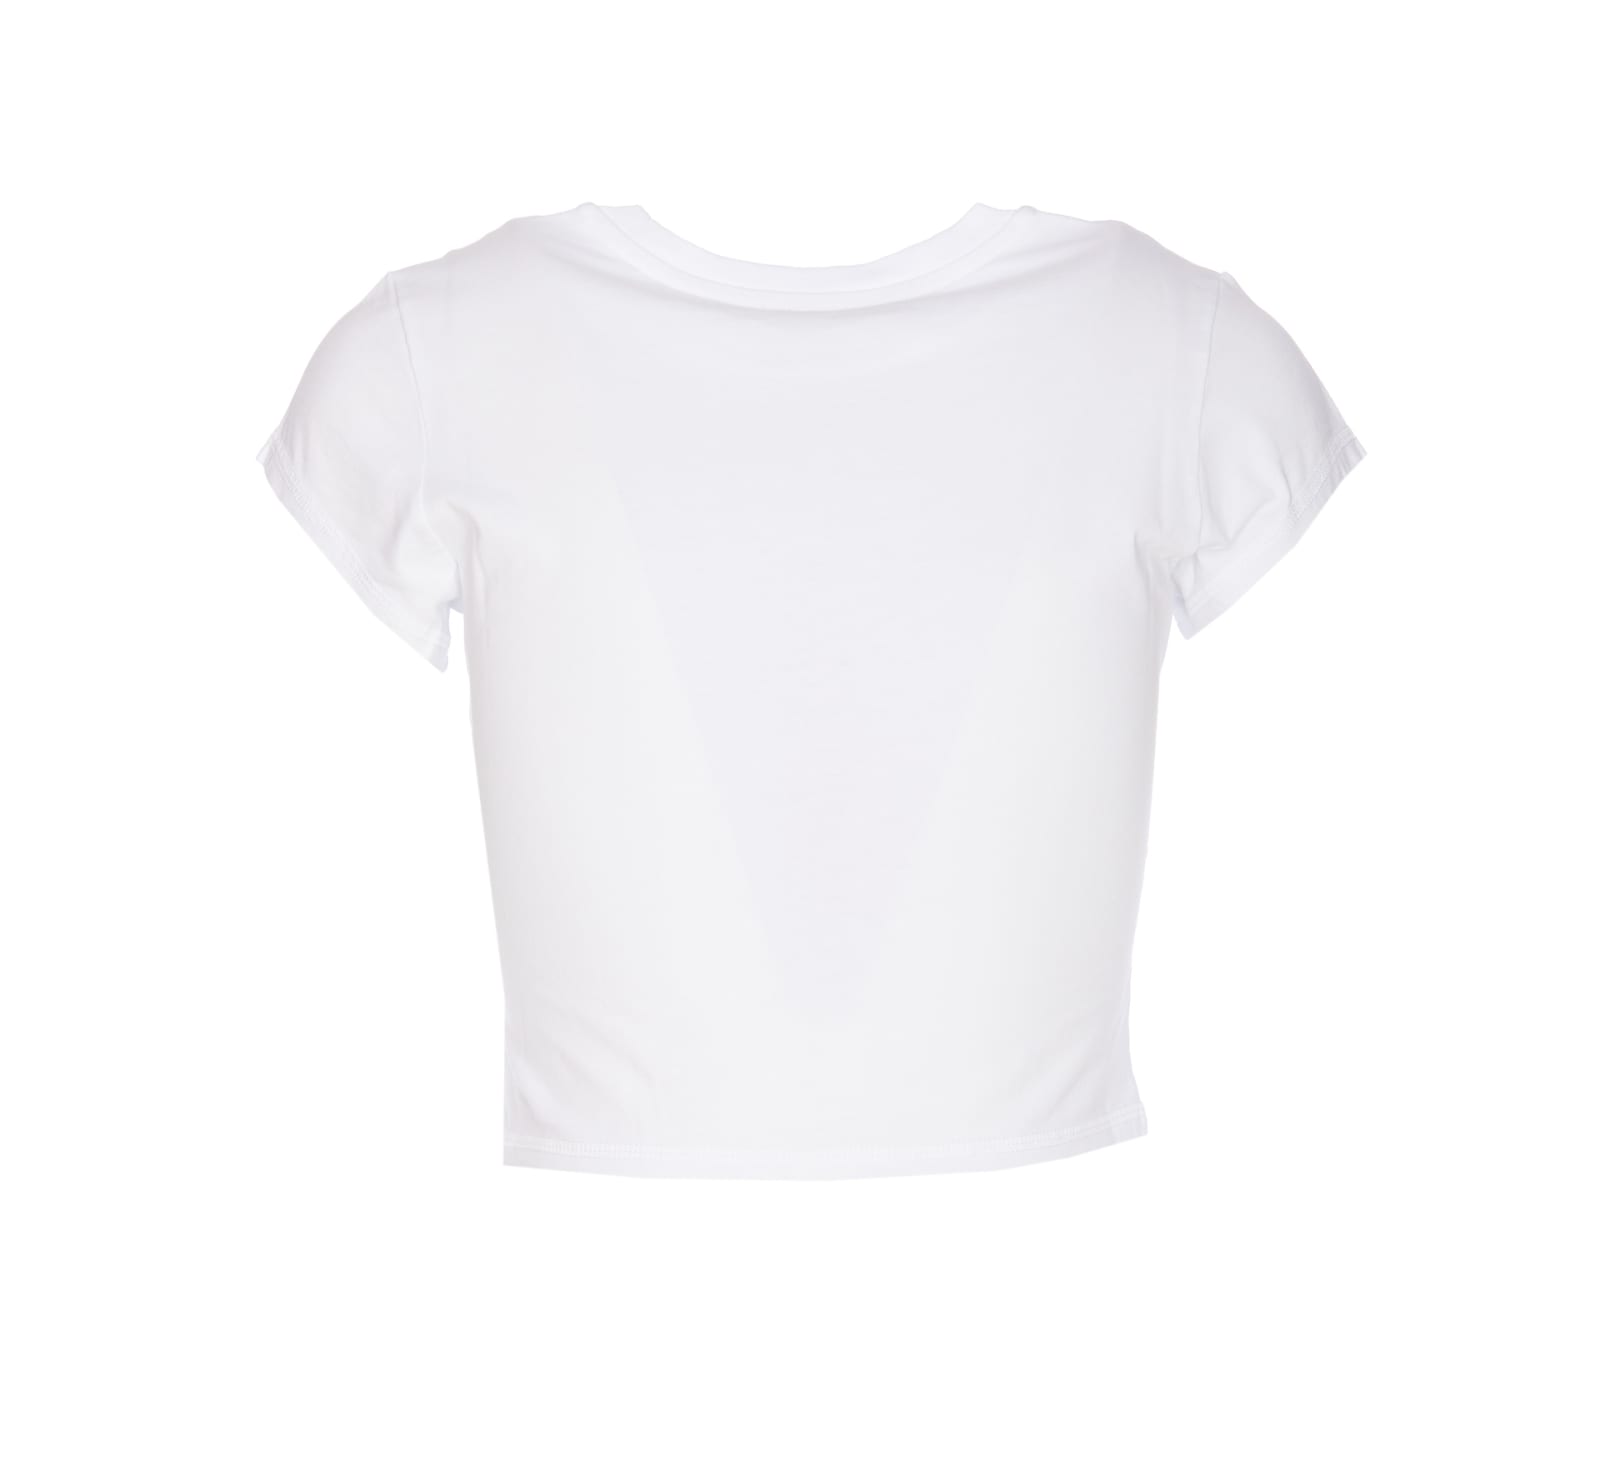 Shop Kenzo Boke Crest Baby T-shirt In White